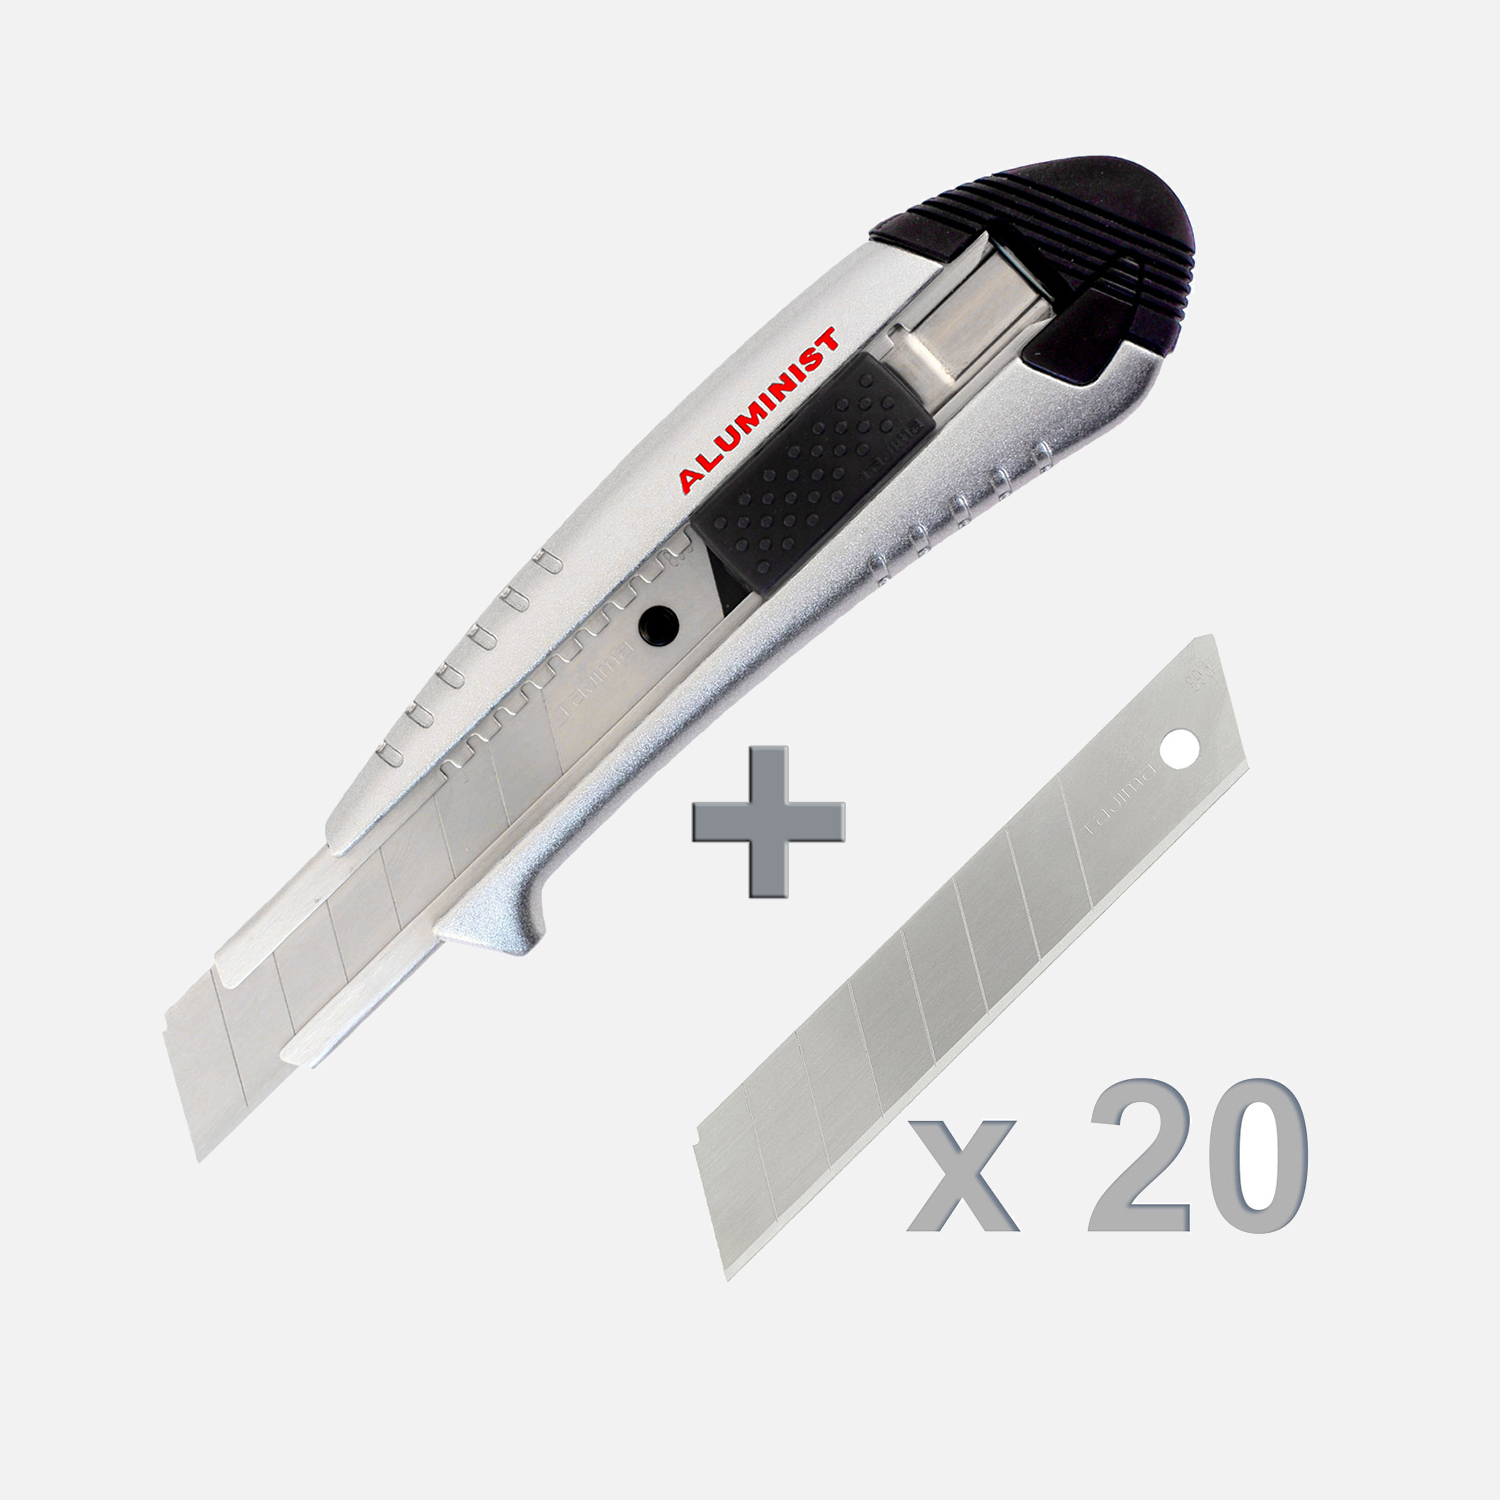 1 Tajima Alu-Cuttermesser - 18mm Klingenbreite + 20 Tajima Abbrechklingen